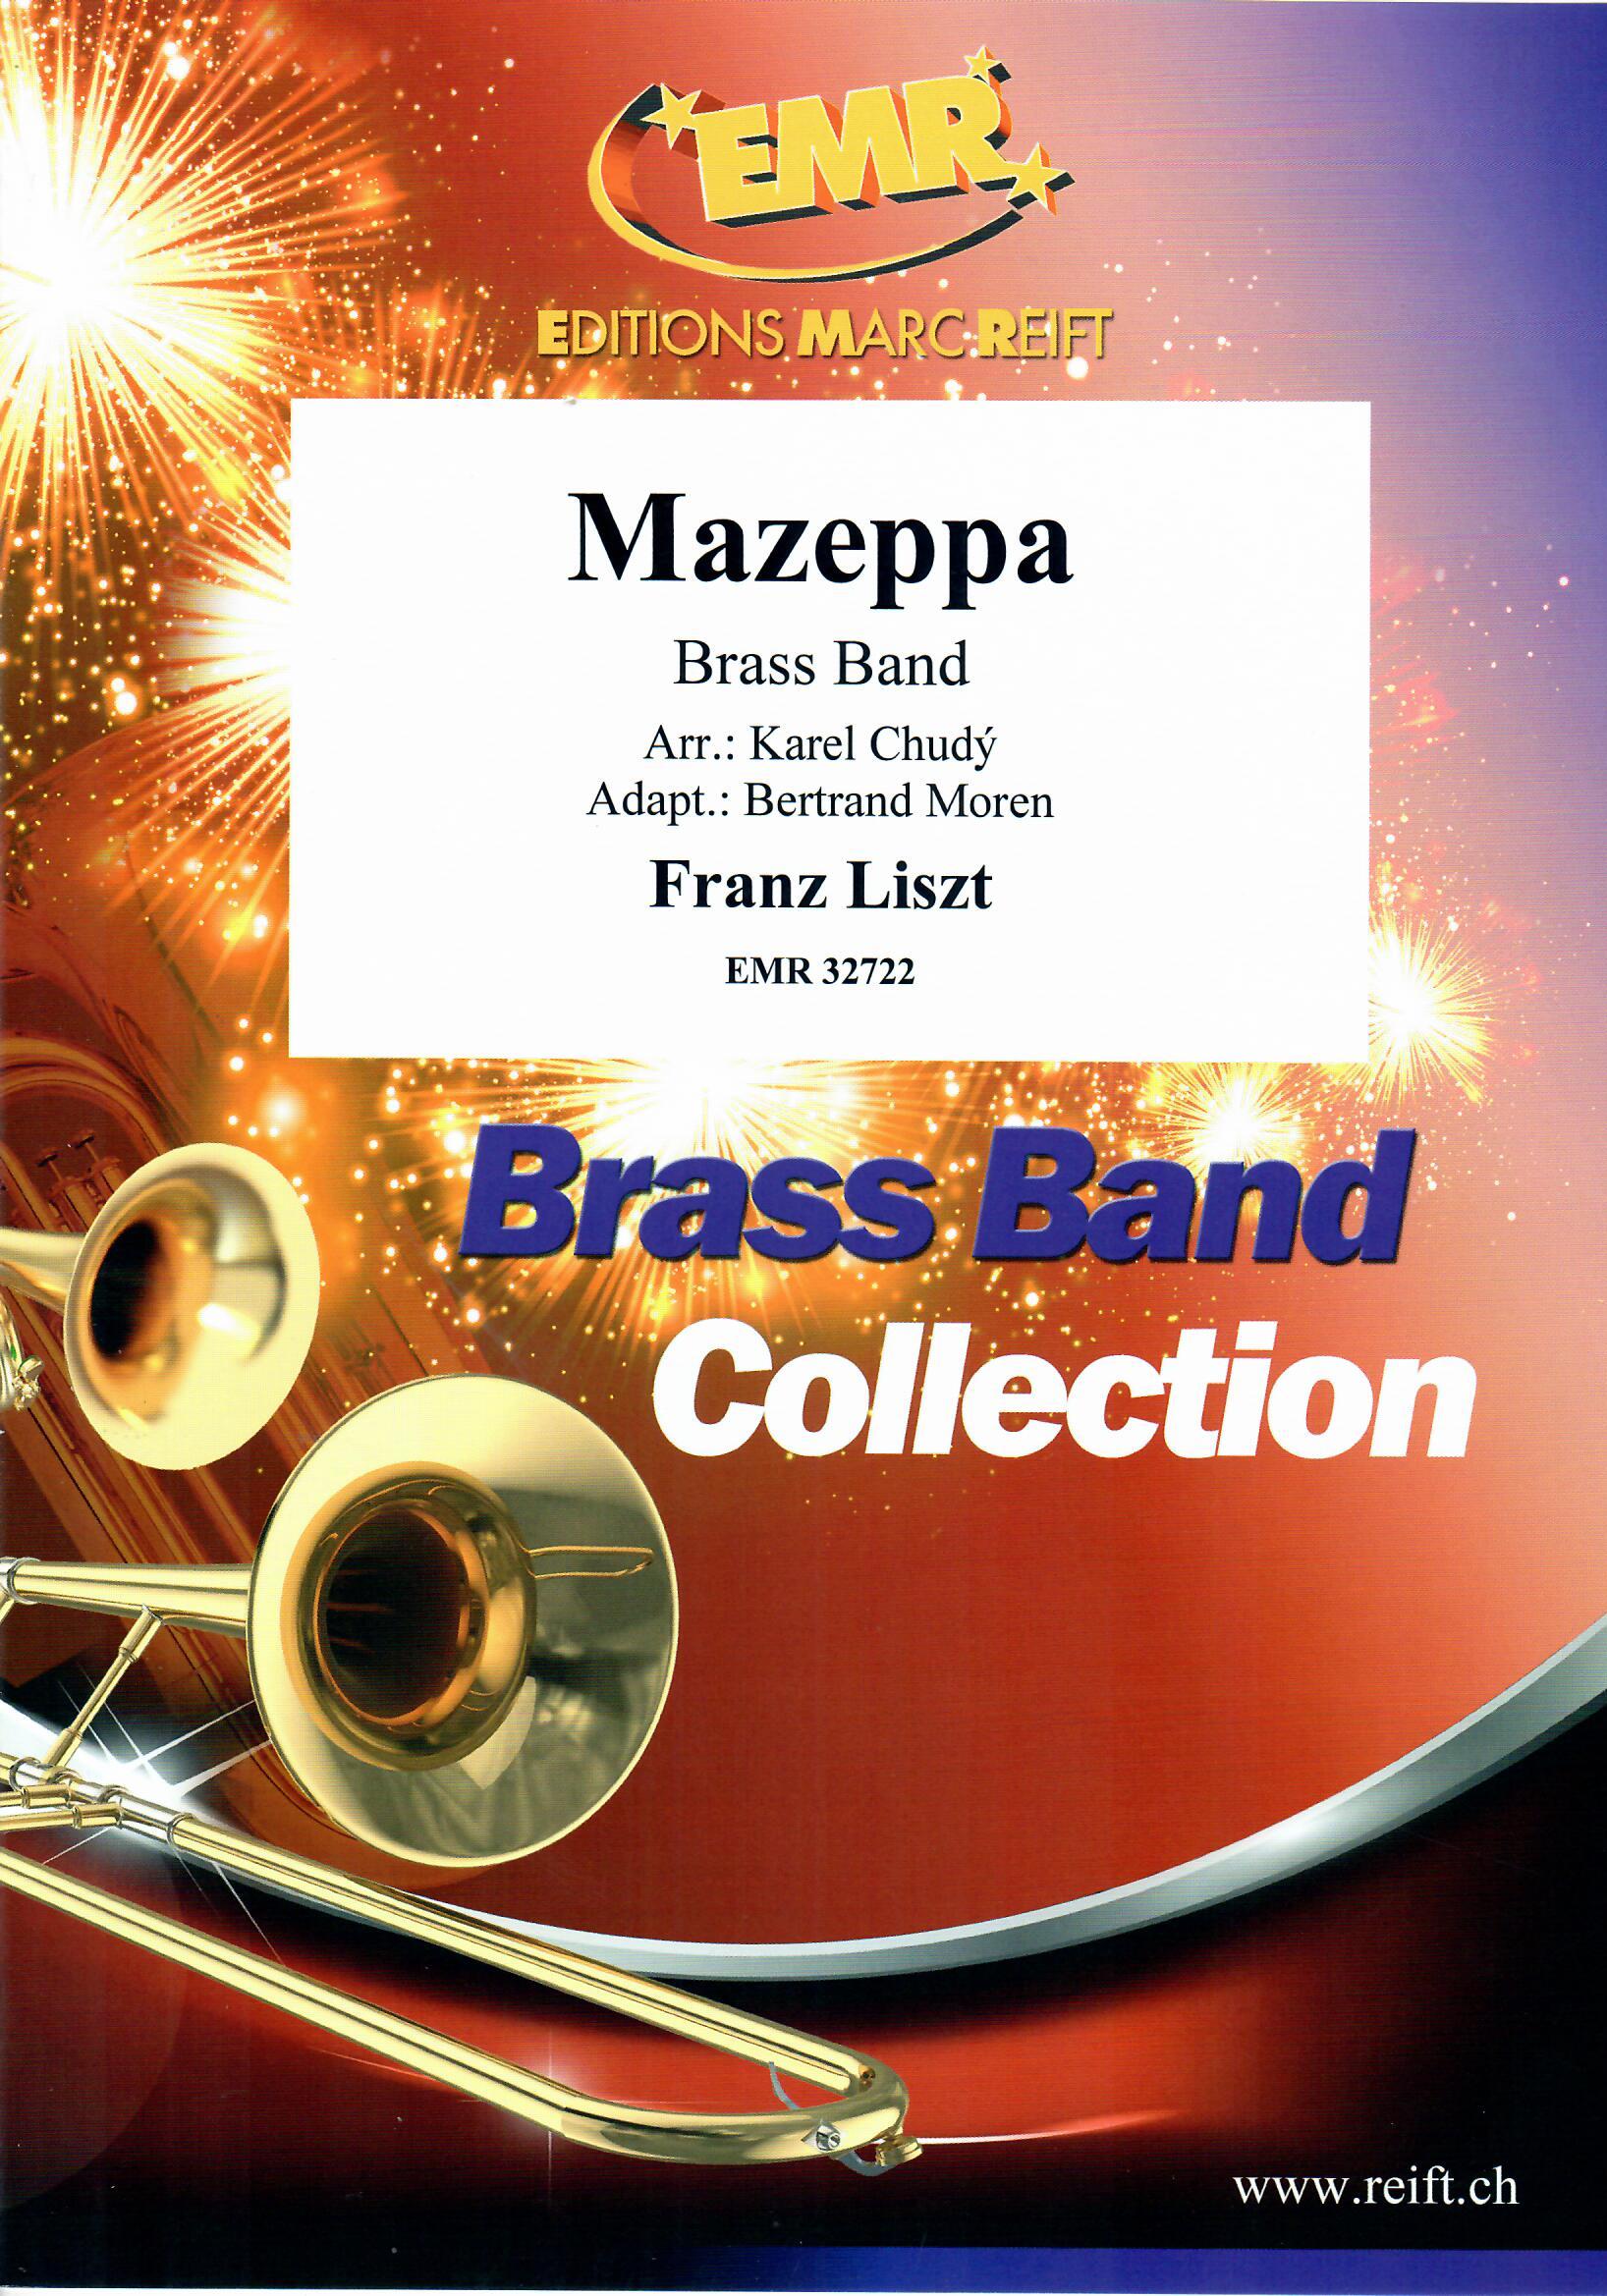 MAZEPPA  - Parts & Score, LIGHT CONCERT MUSIC